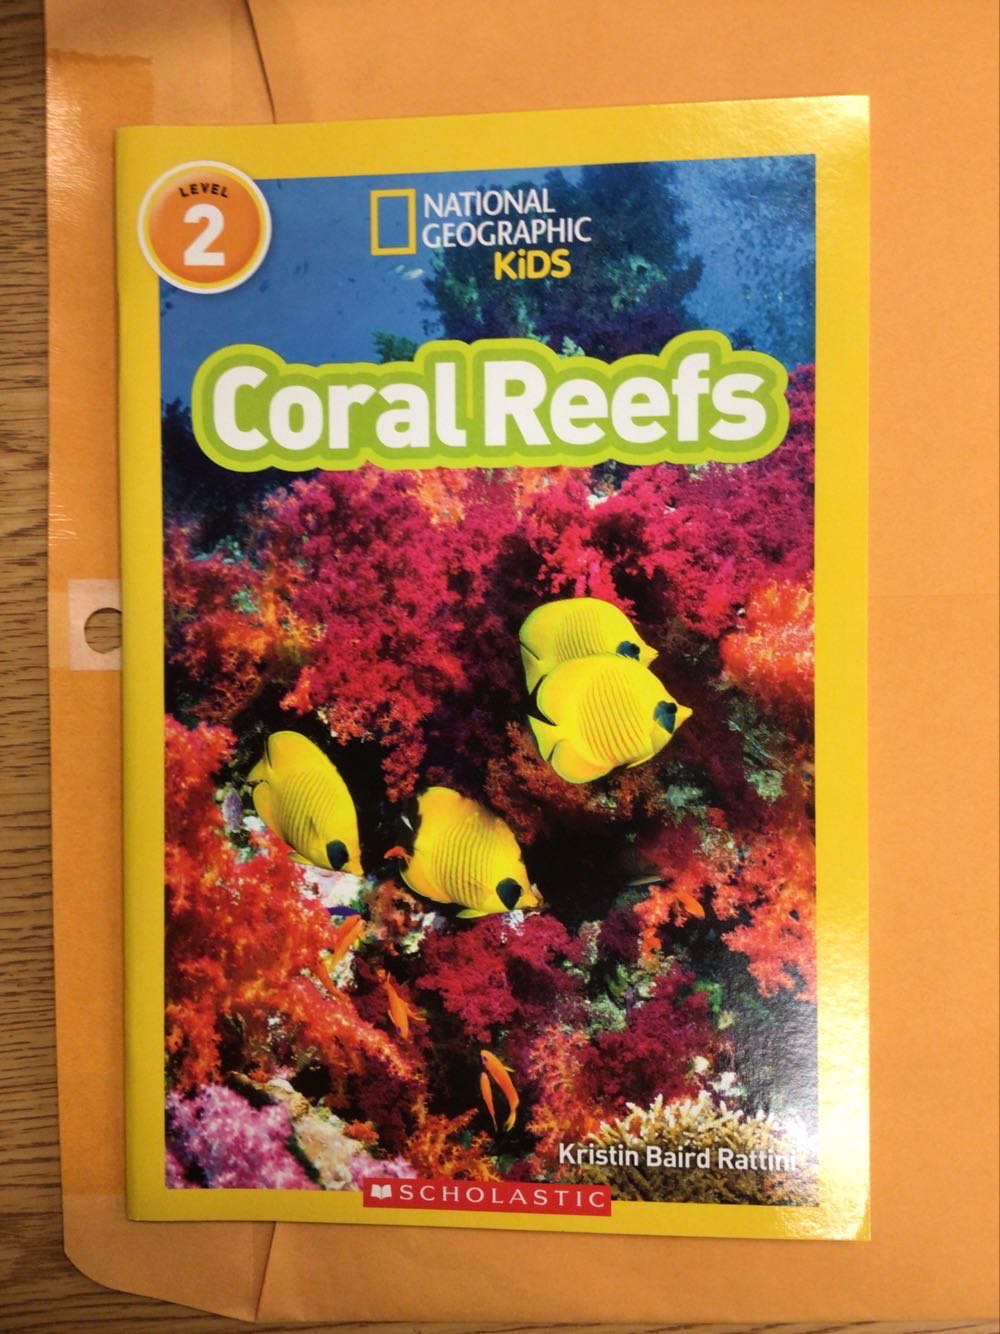 Coral Reefs - Kristin Baird Rattini (- Paperback) book collectible - Main Image 1